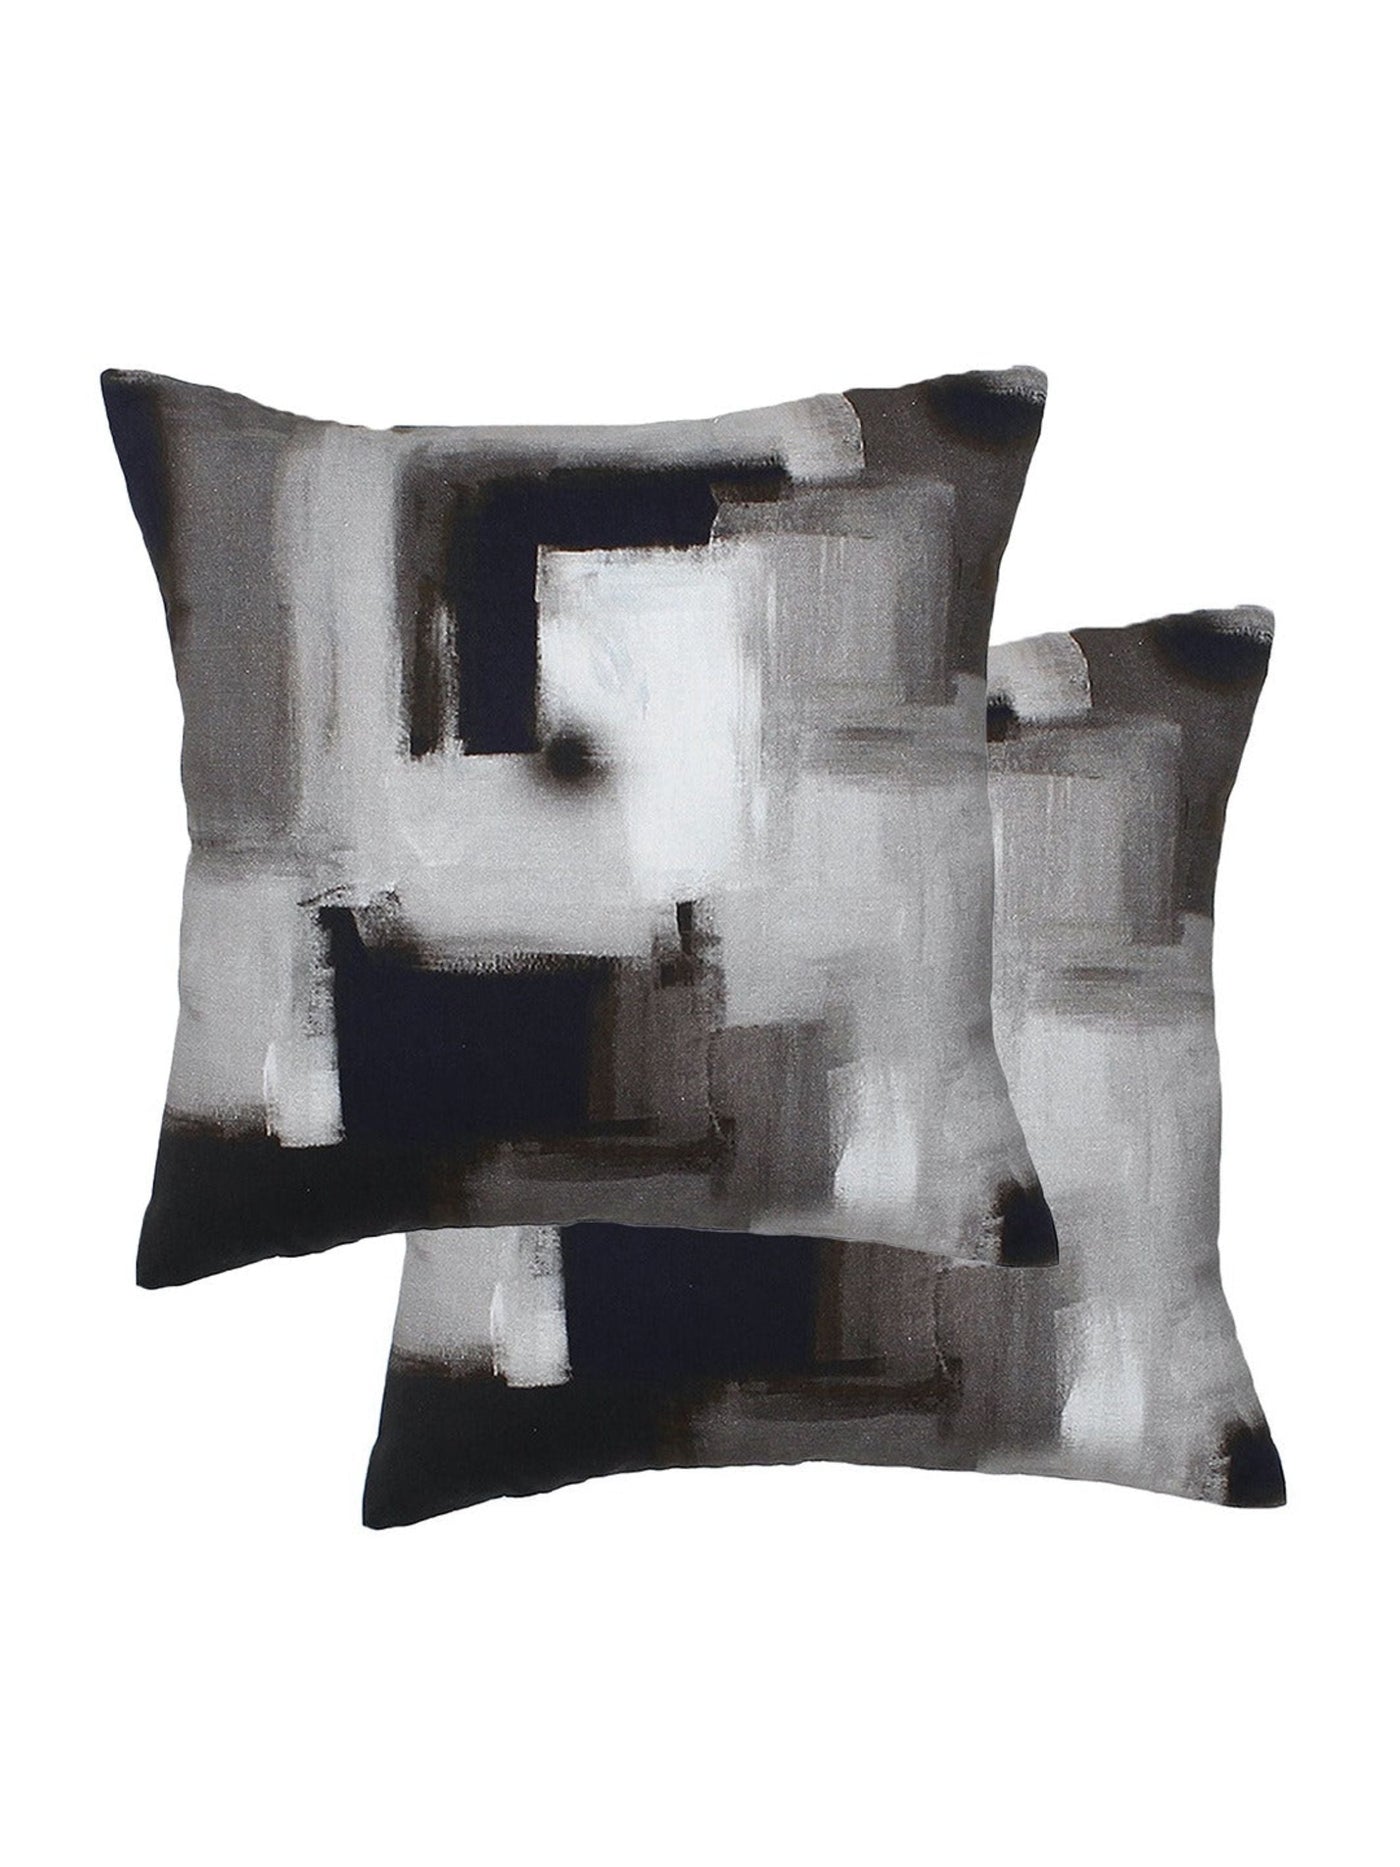 Cushion Cover - Maqboolfida Cubism Cotton 2 s-Grey-8903773001132